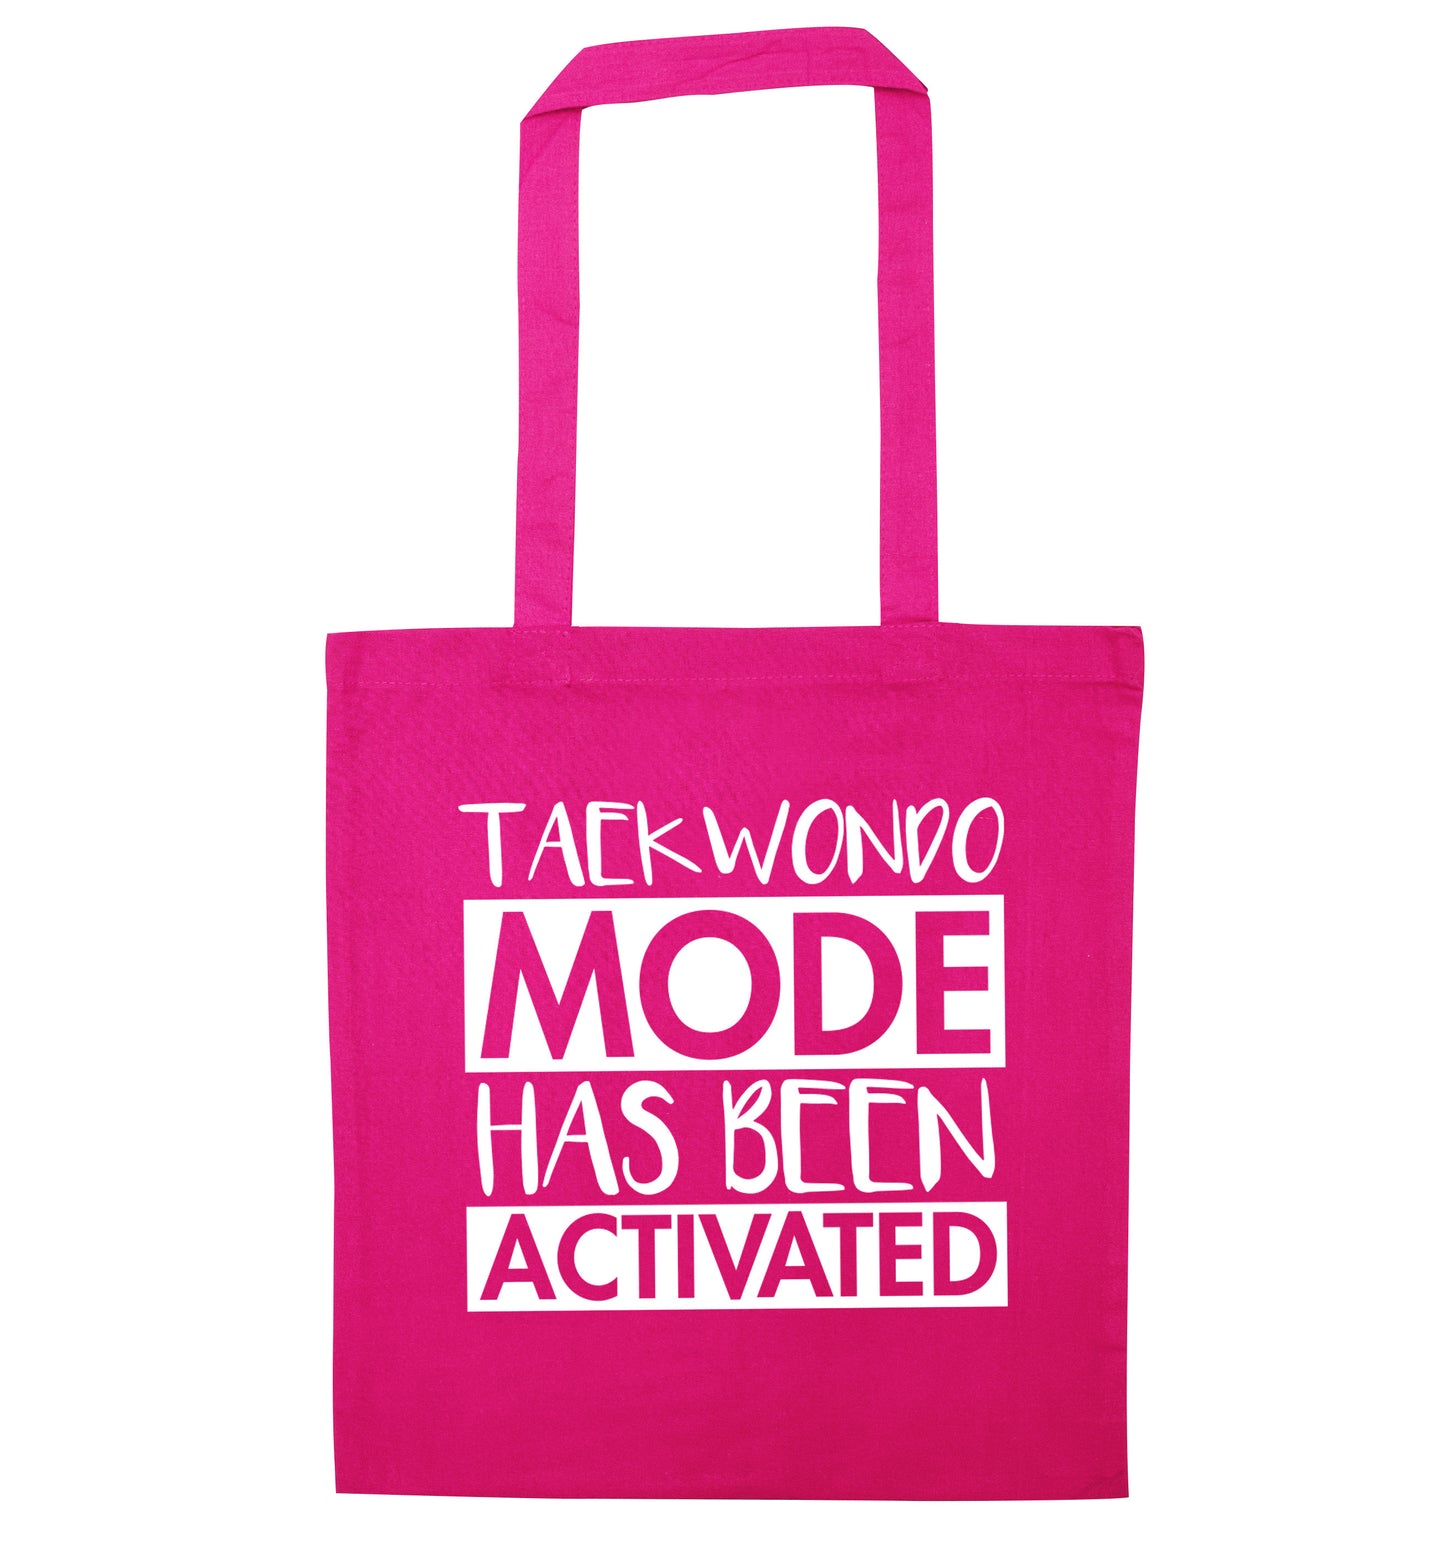 Taekwondo mode activated pink tote bag